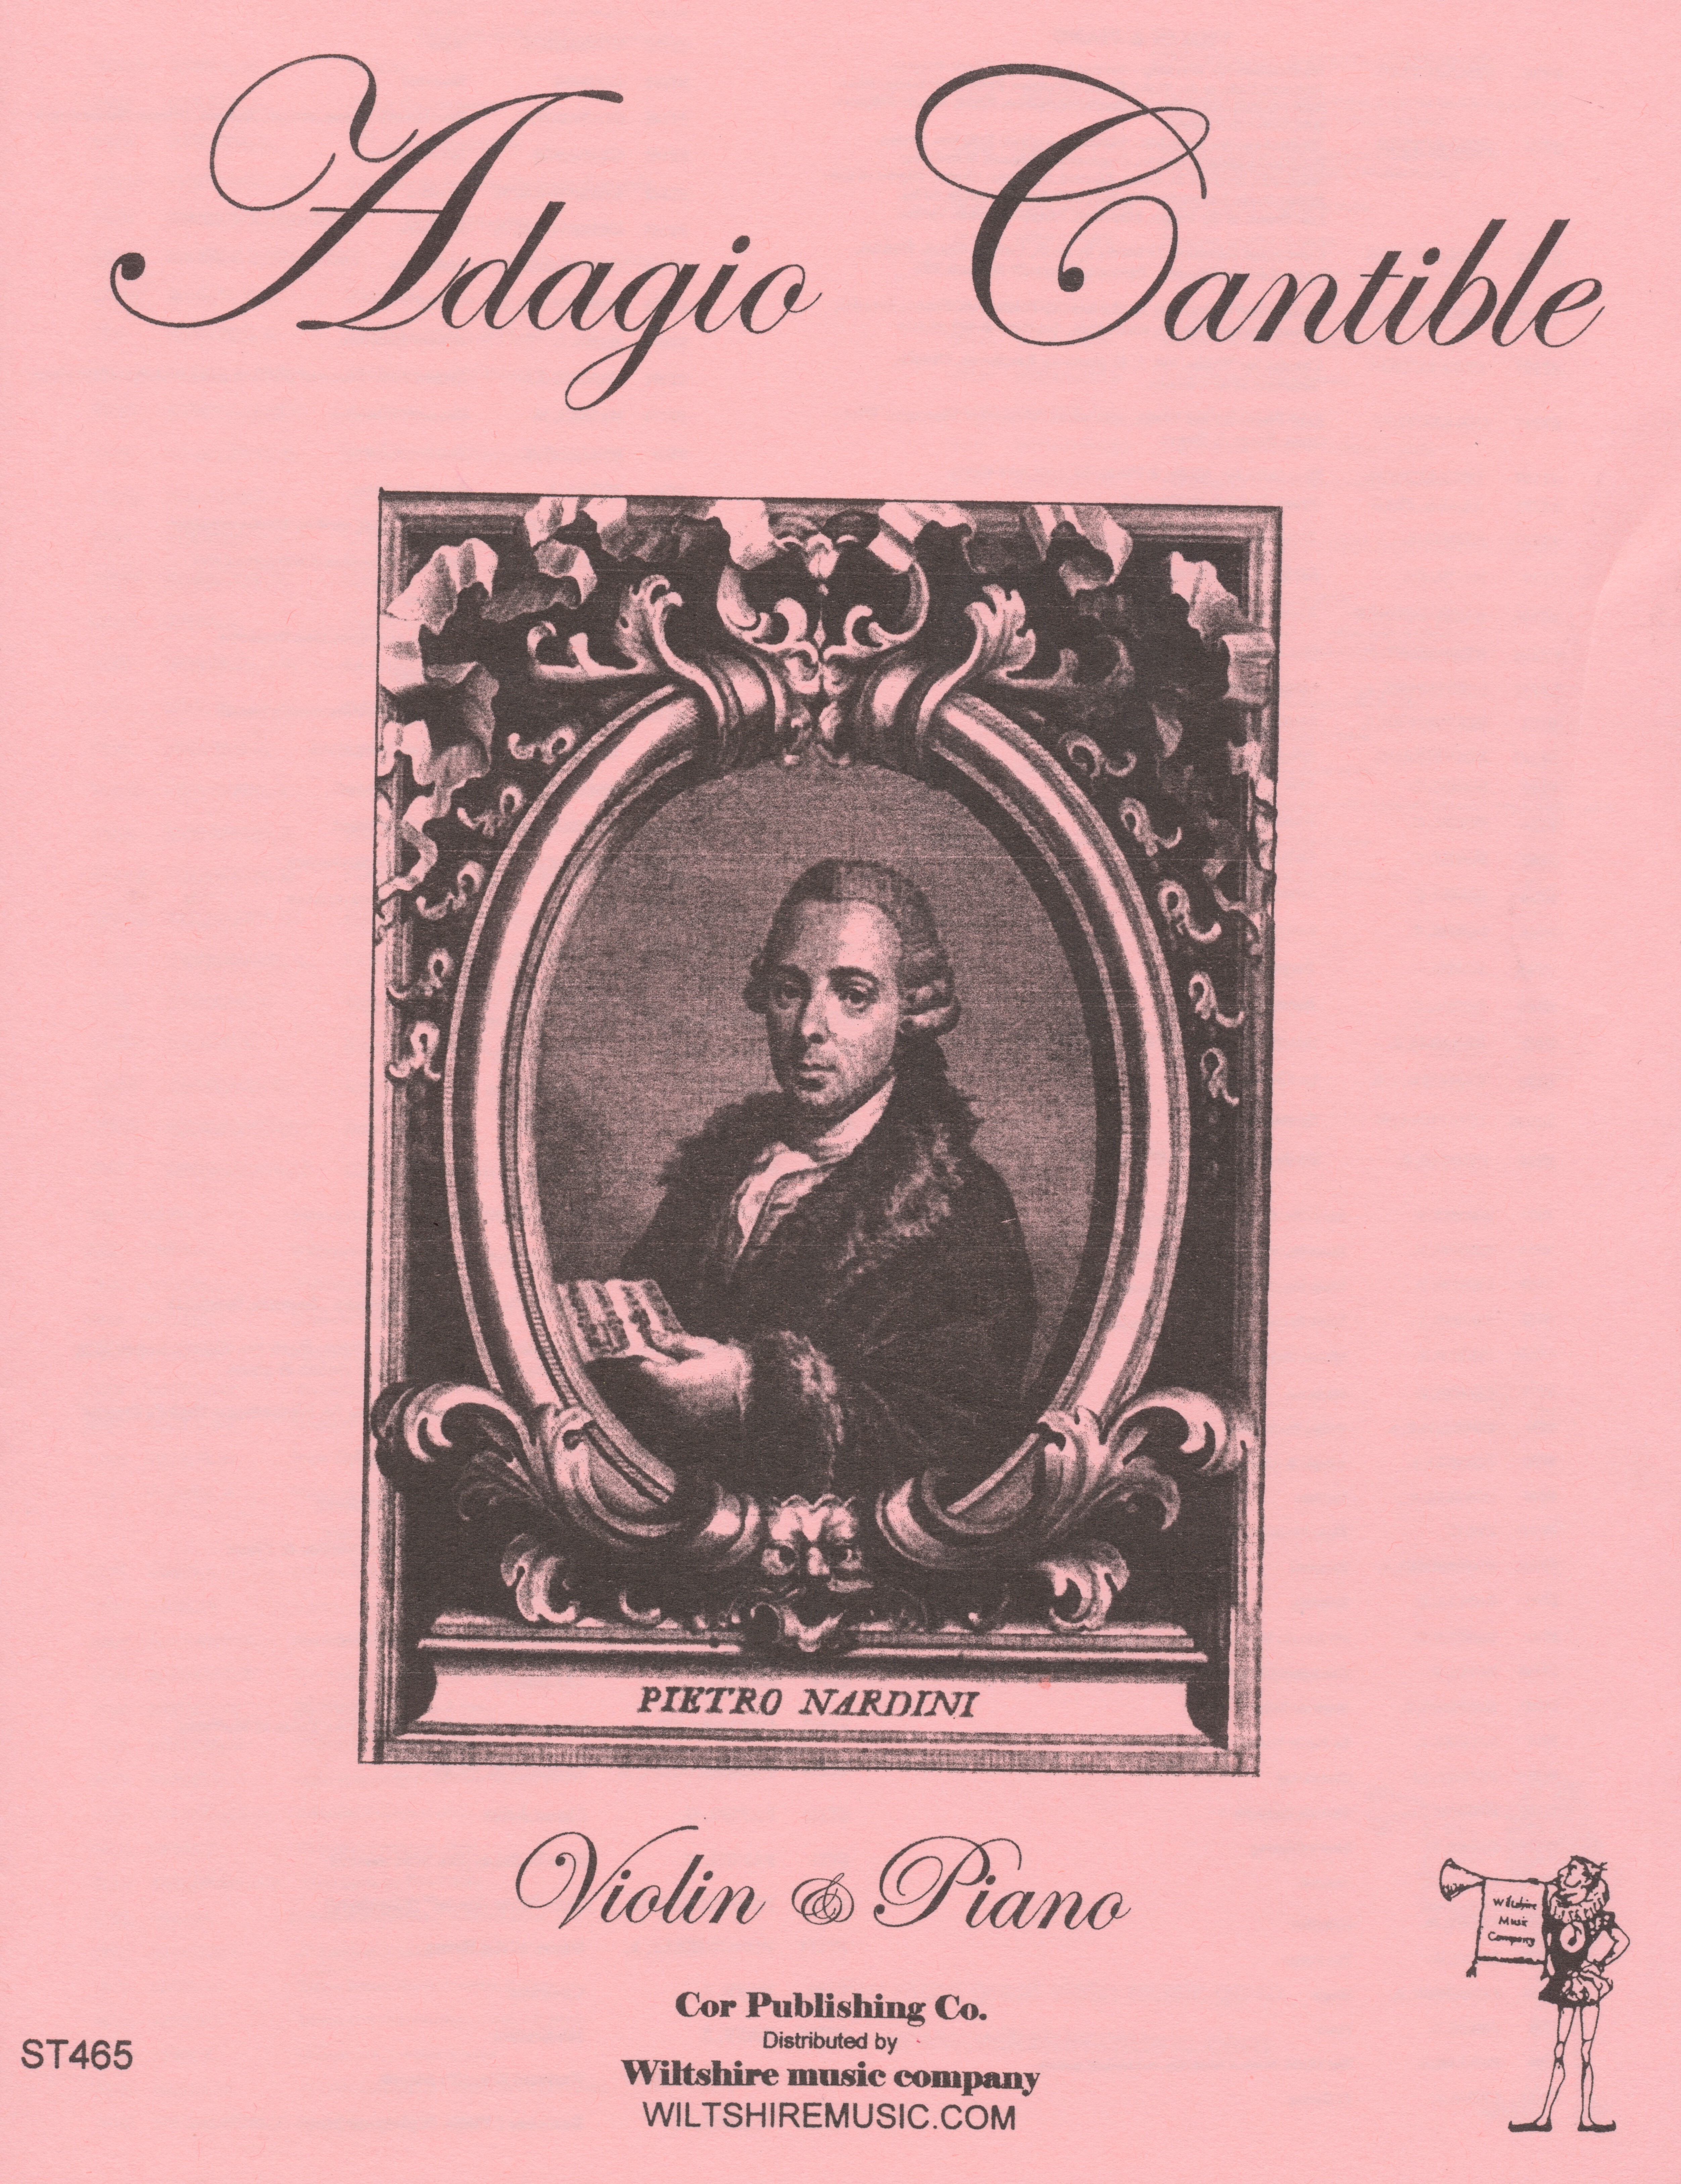 Adagio Cantible, Pietro Nardini, violin & piano